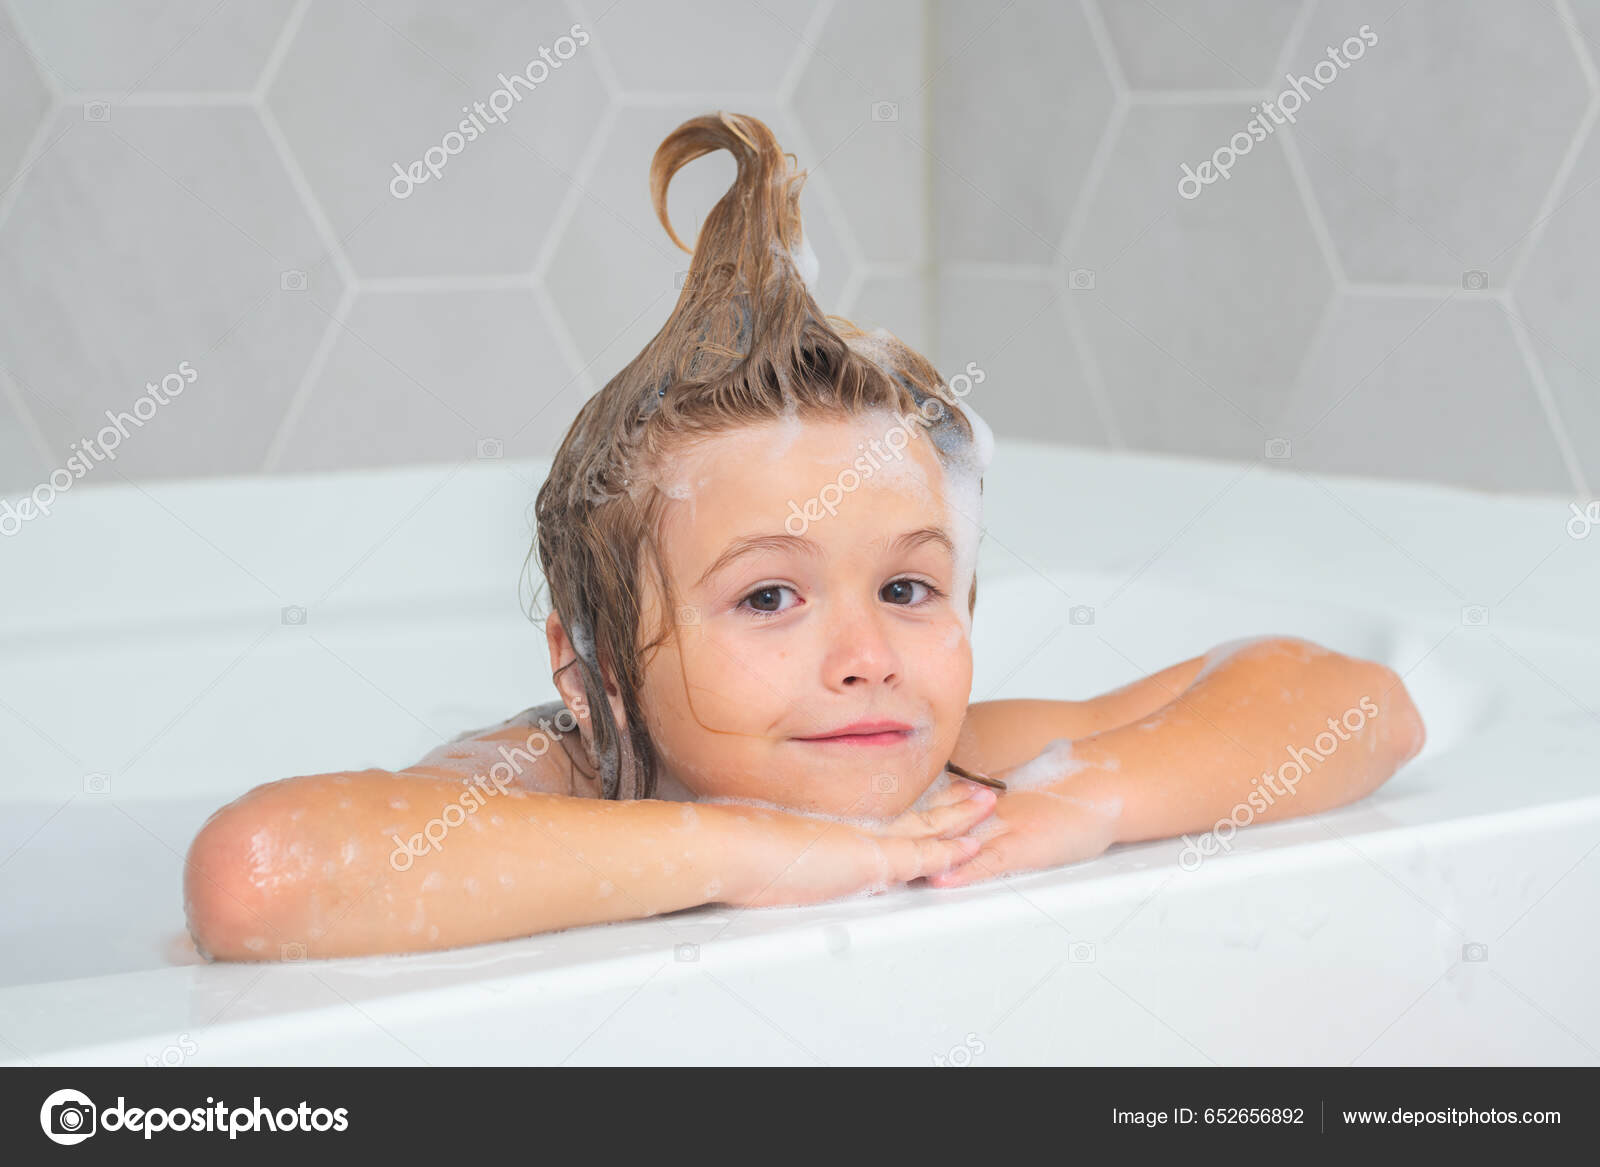 Crazy Soap Foam Fun  Bath Time Foam Activities for Kids 